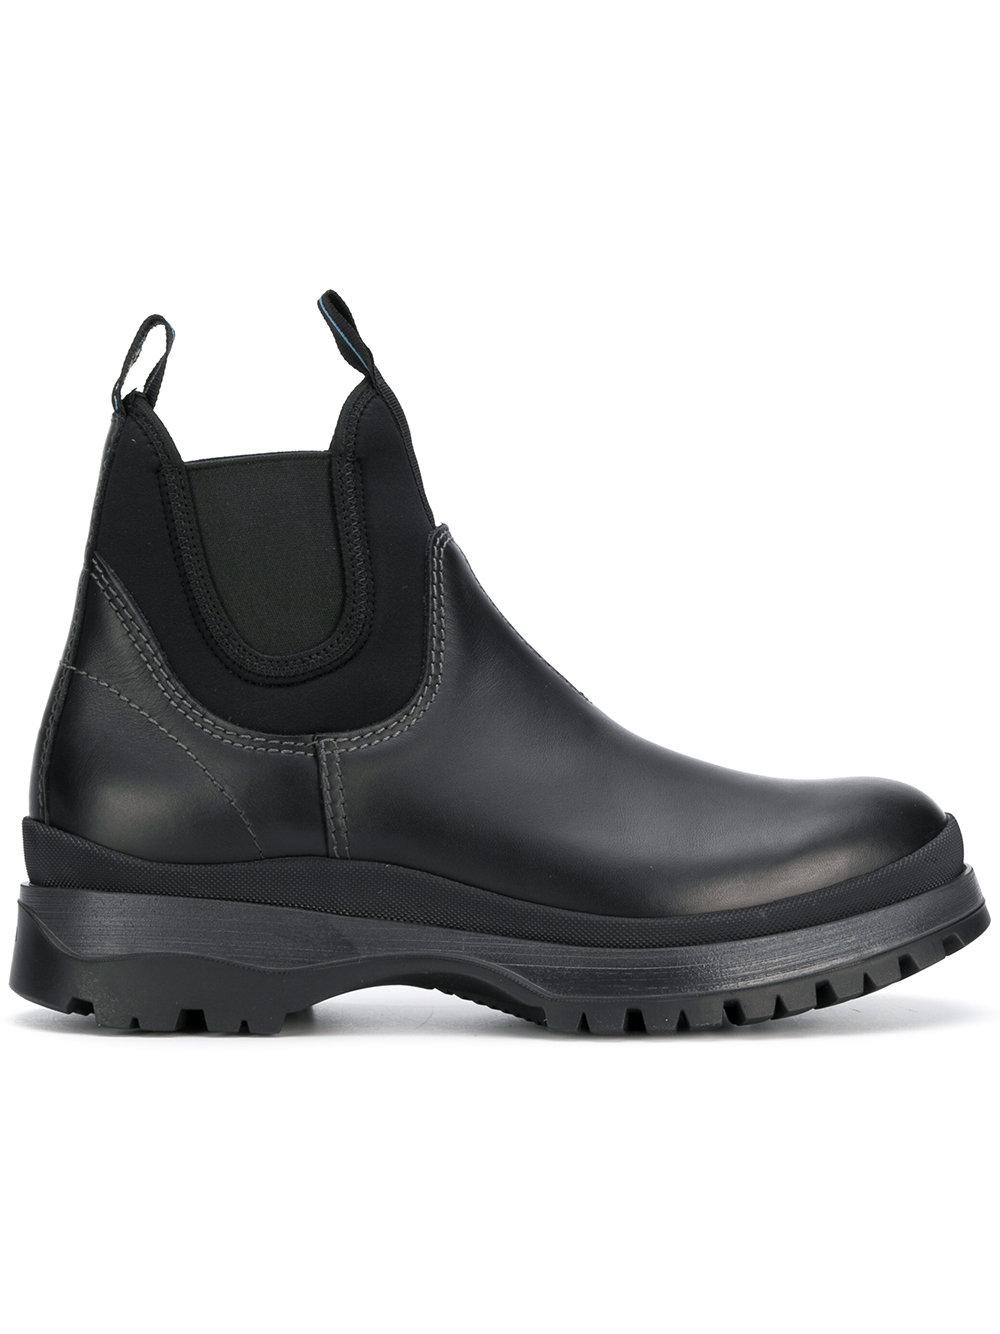 Prada Brixen Rain Boots in Black for Men - Lyst